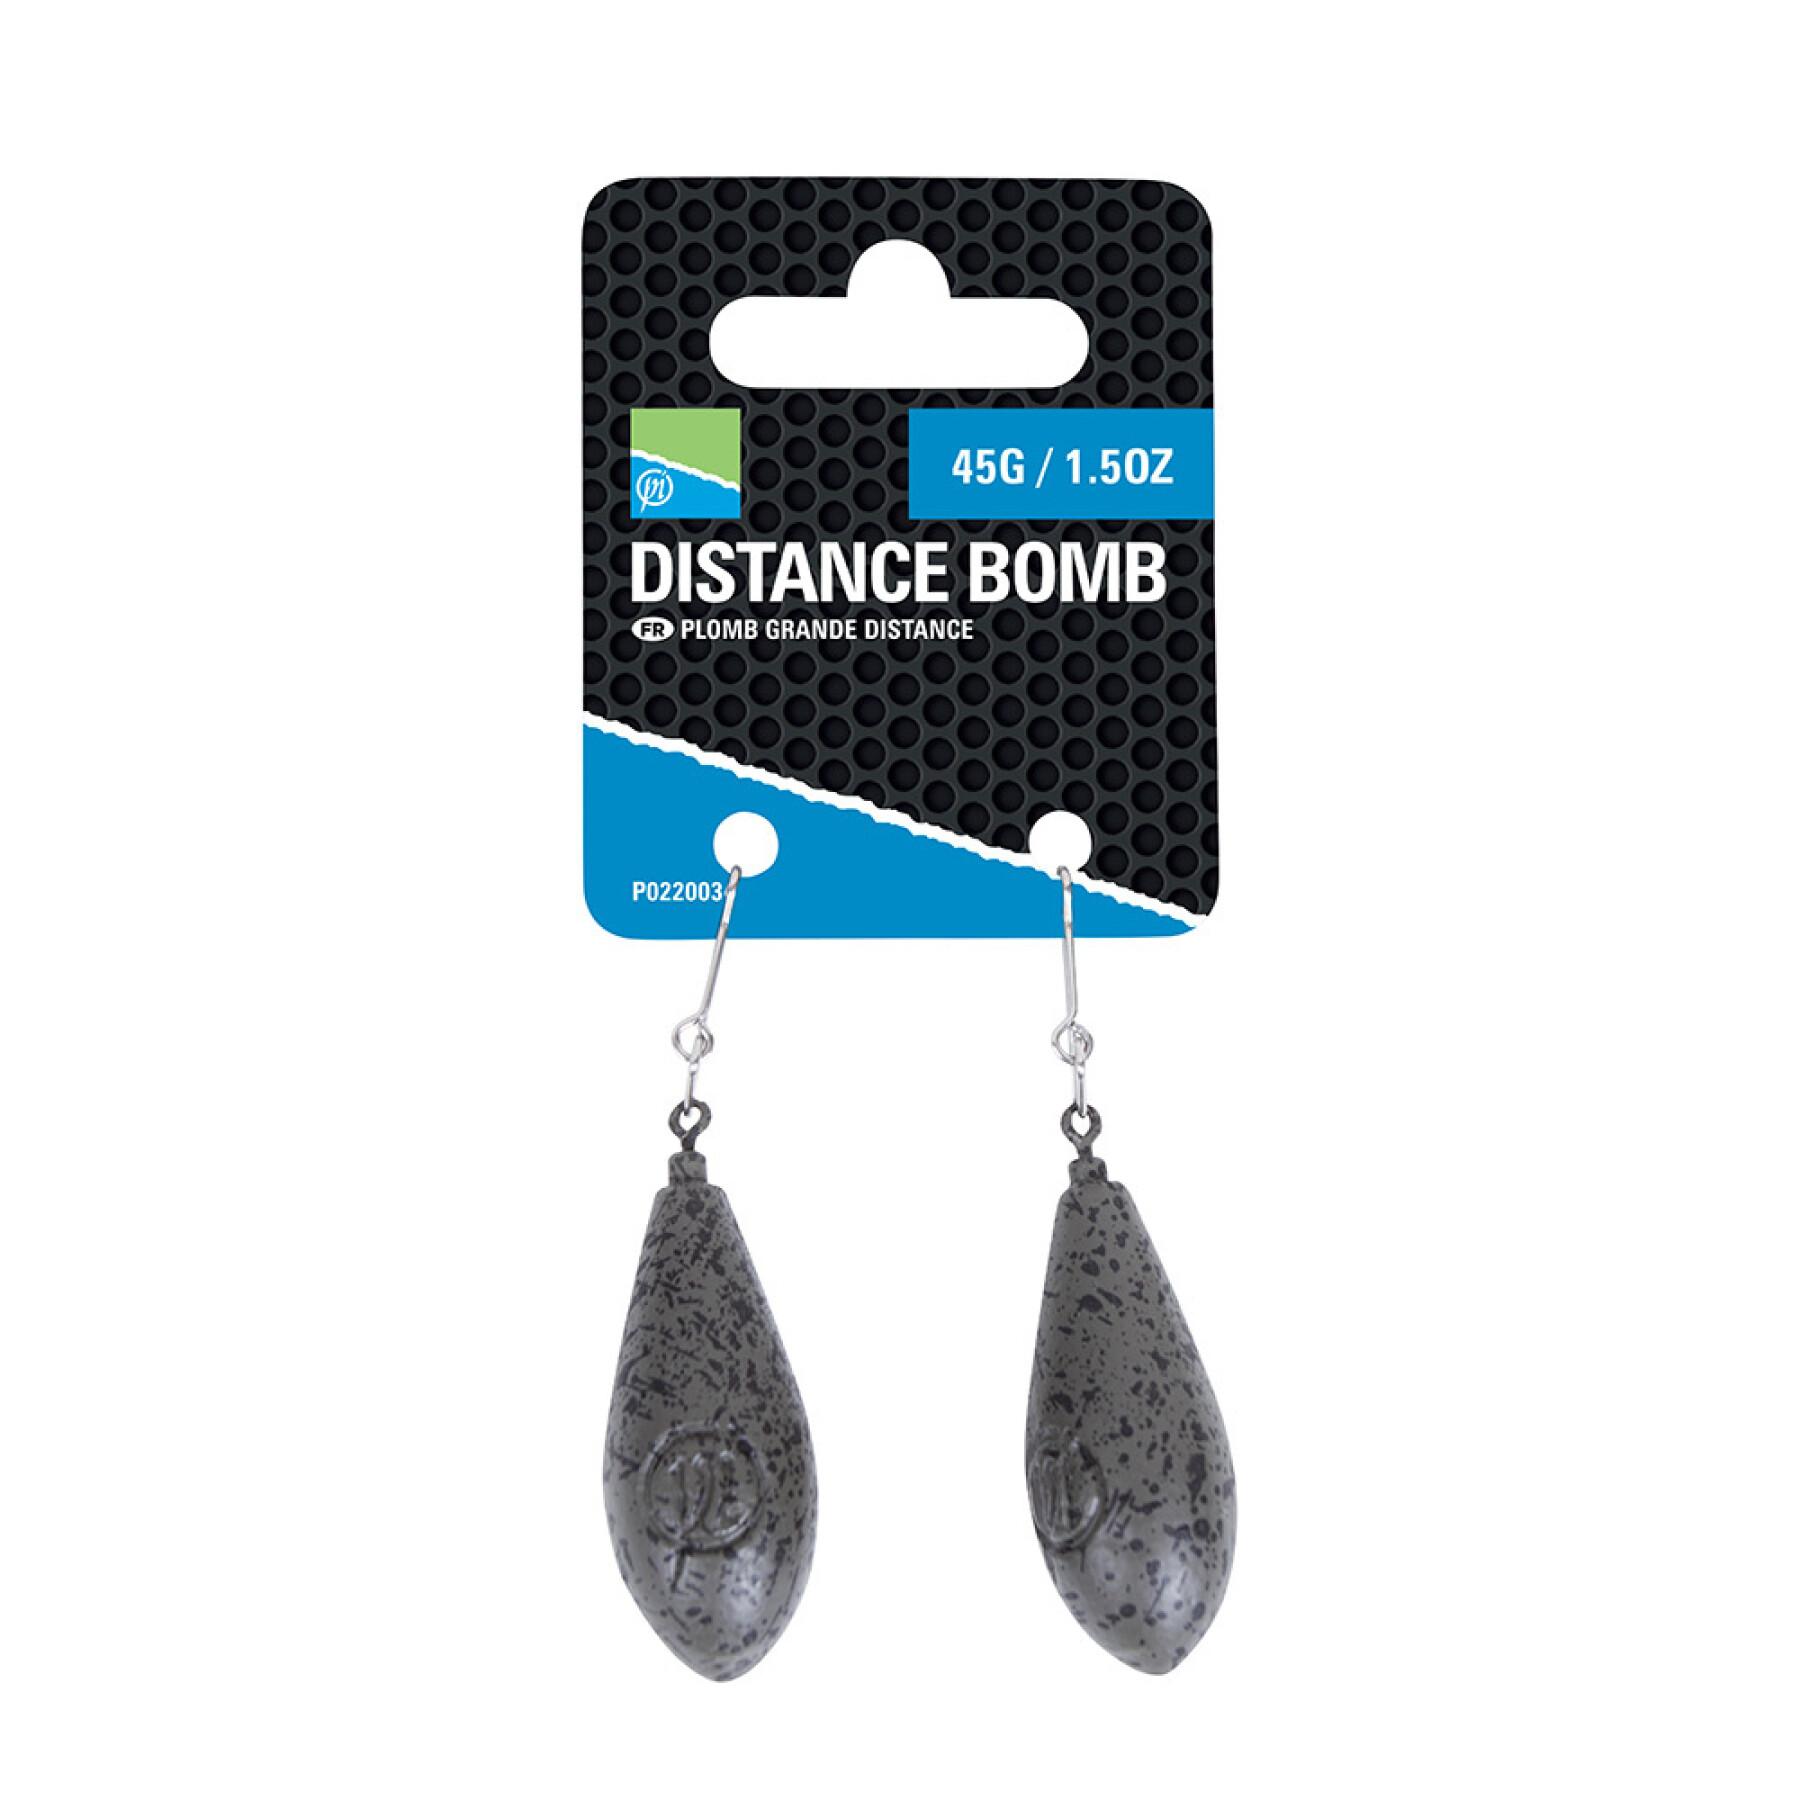 Piombo Preston distance bomb 30g 2x5